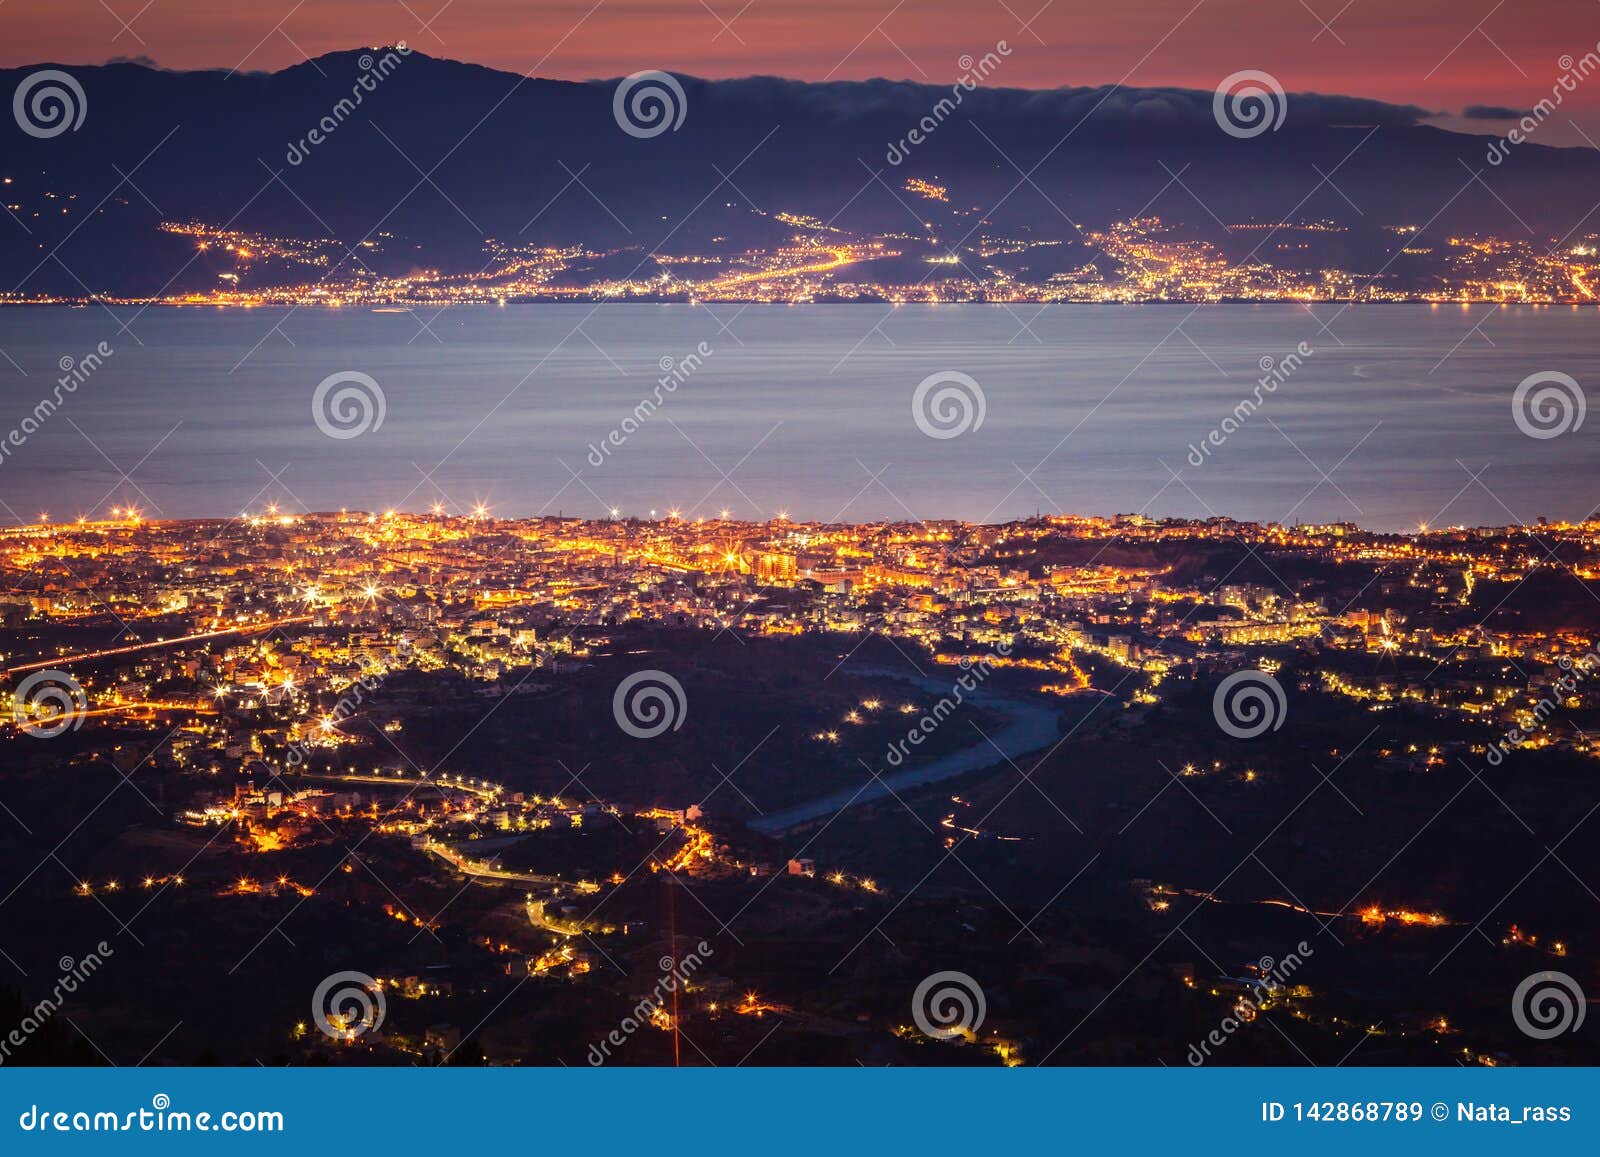 messina strait and reggio calabria city lights at dusk